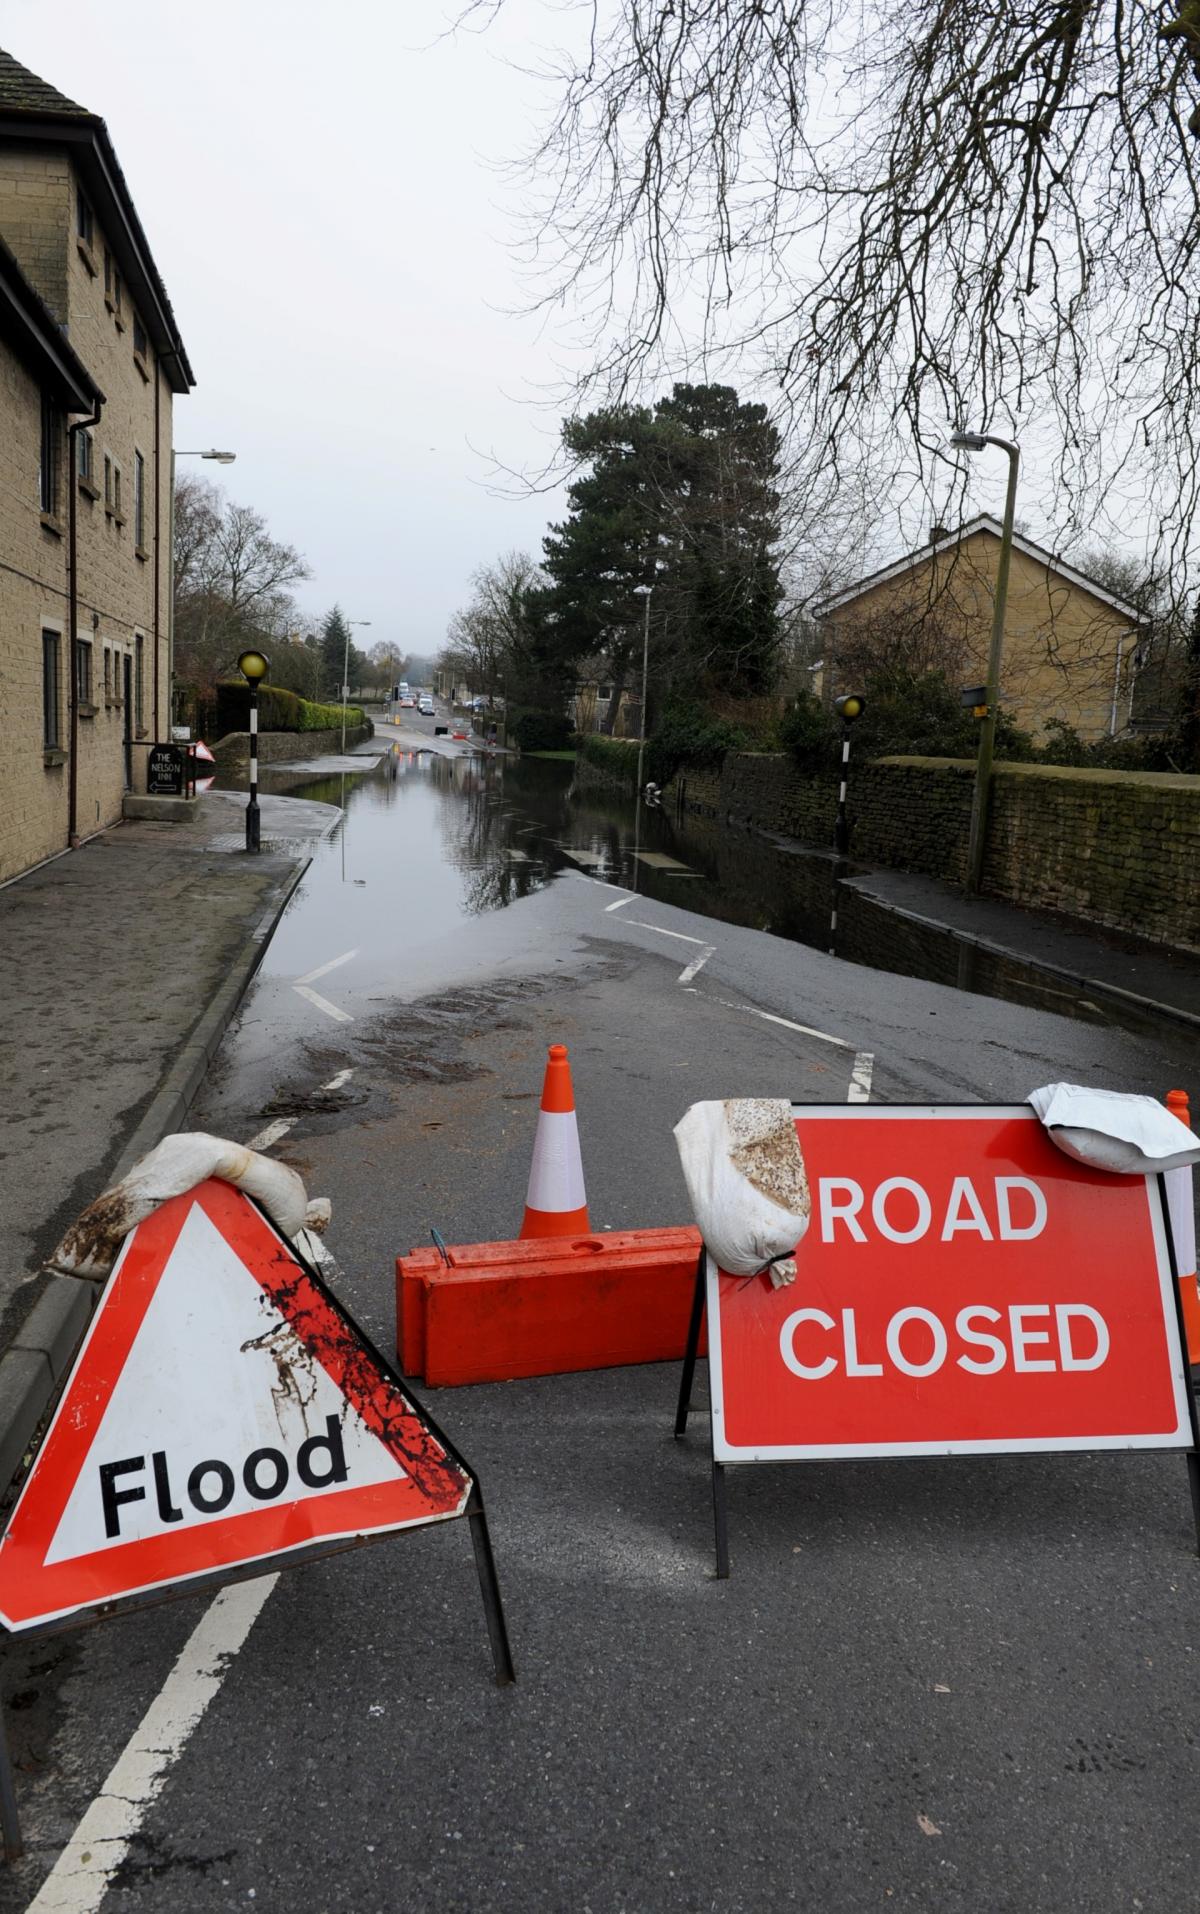 Spitalgate Lane floods, Cirencester